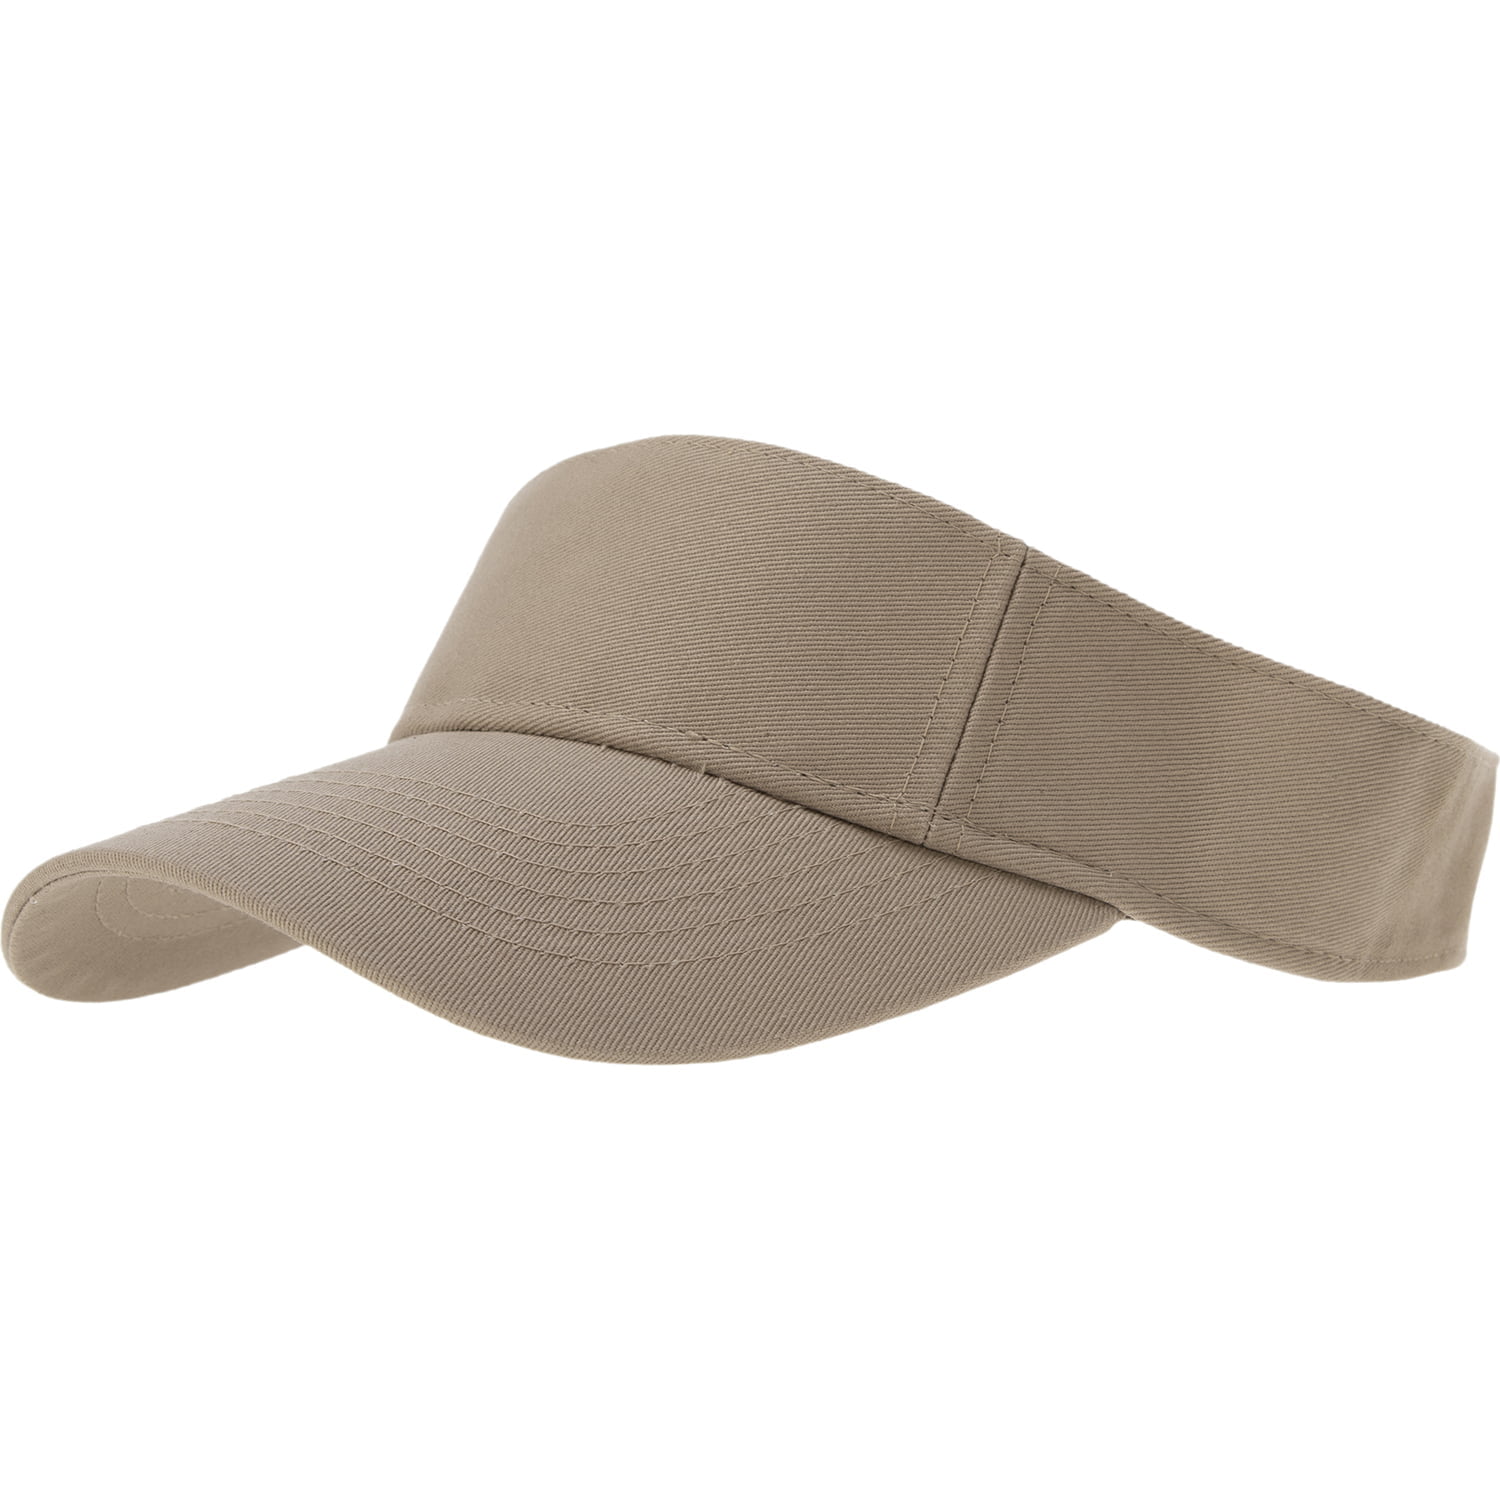 1pc Khaki Sun Visor Hat - Single Piece